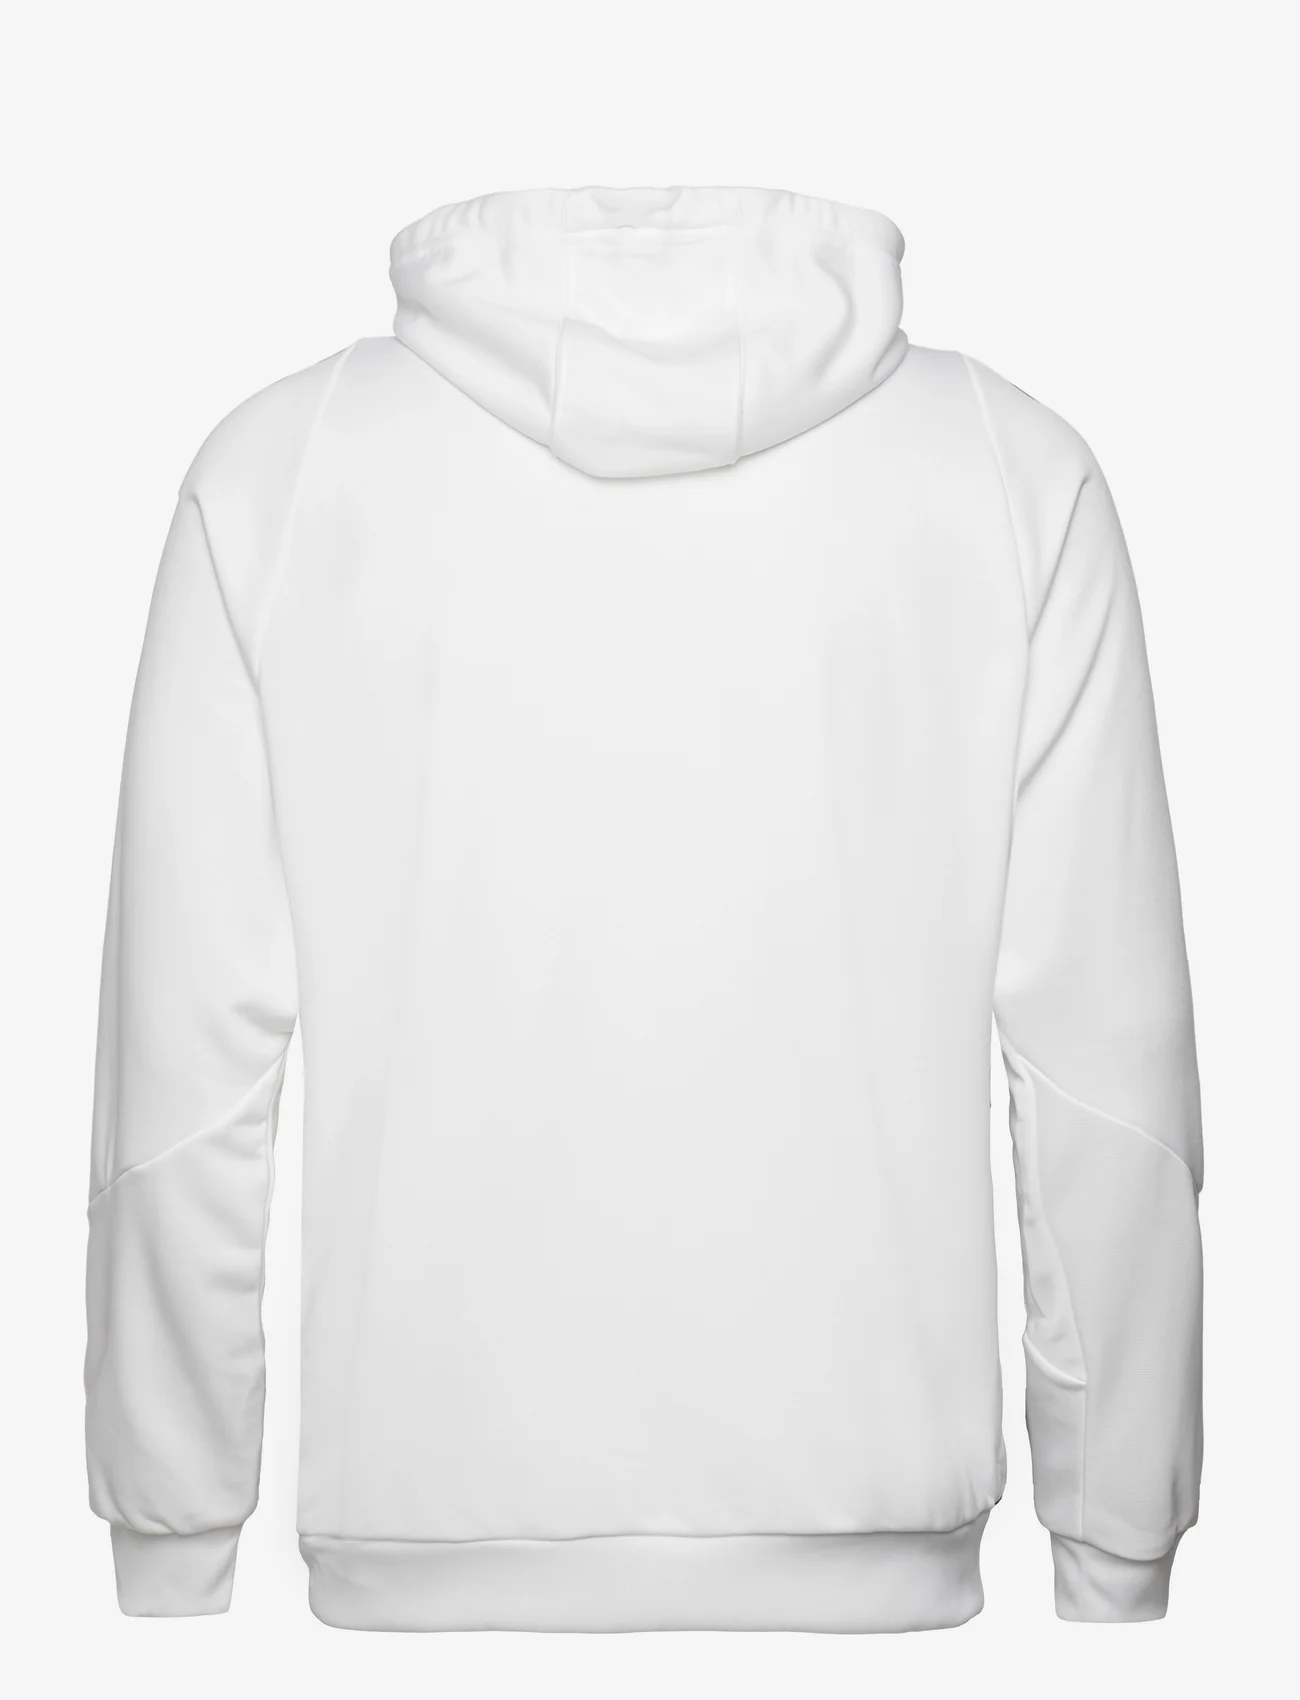 adidas Performance - TIRO24 TRHOOD - hoodies - white/black - 1